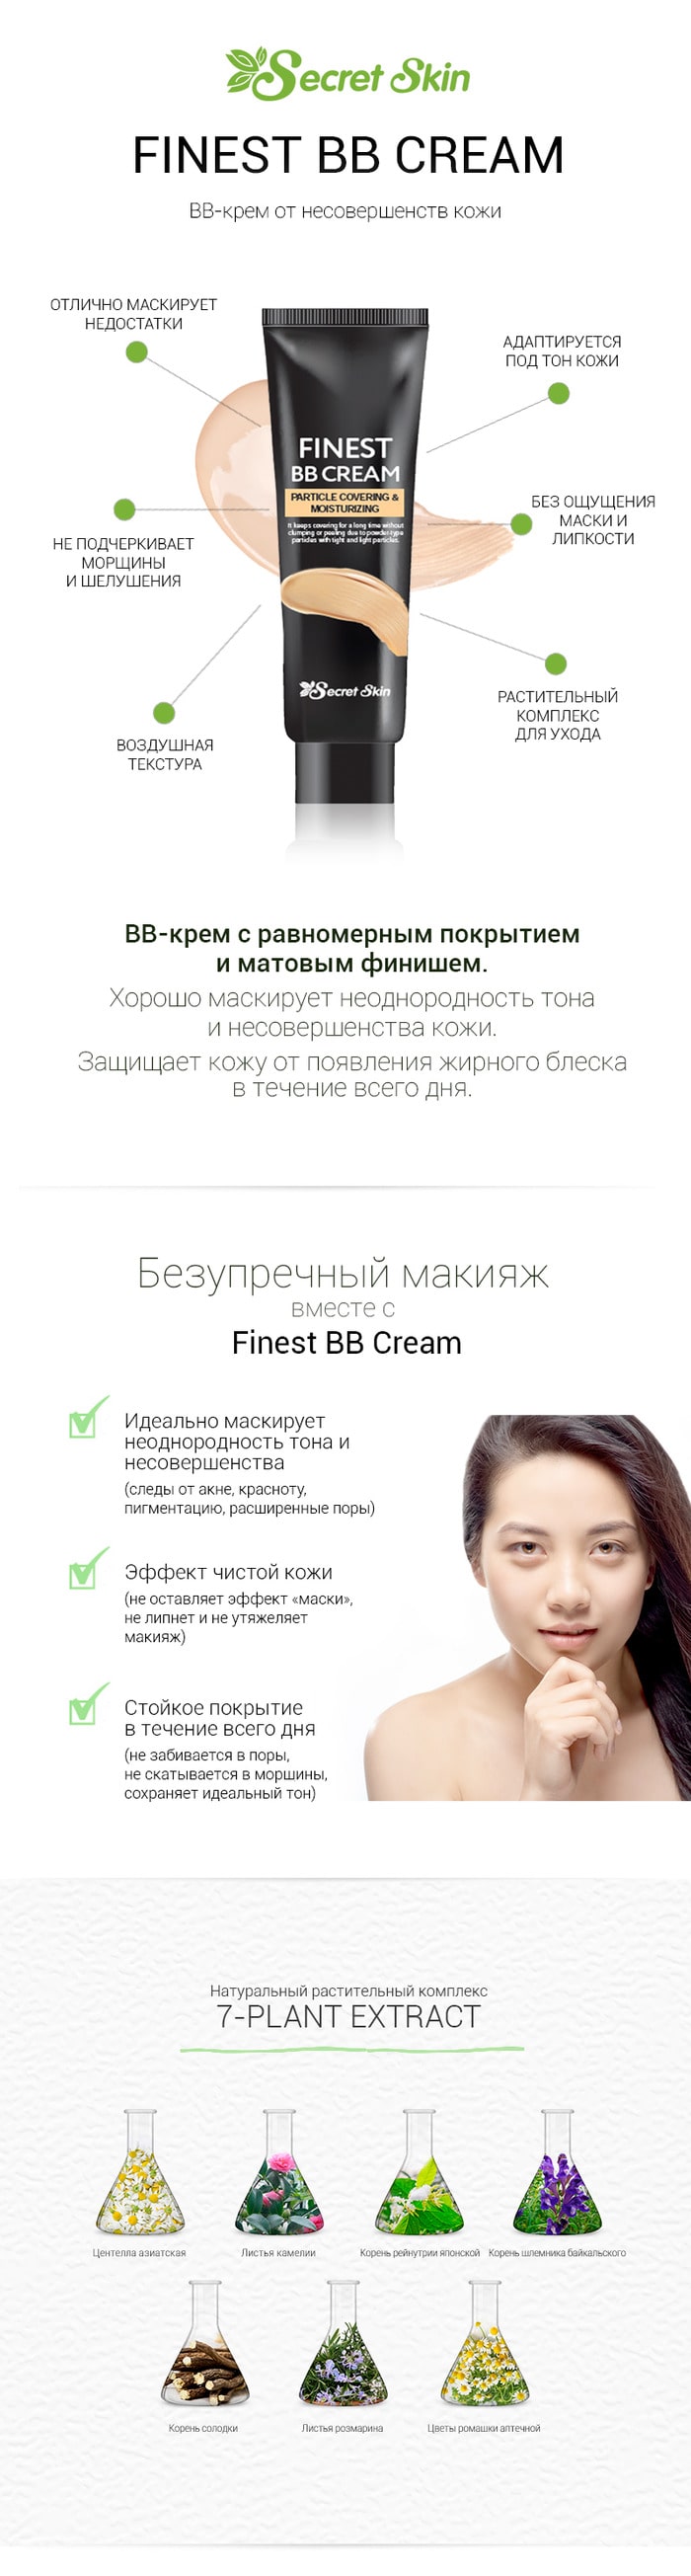 SECRET SKIN Finest BB Cream-min